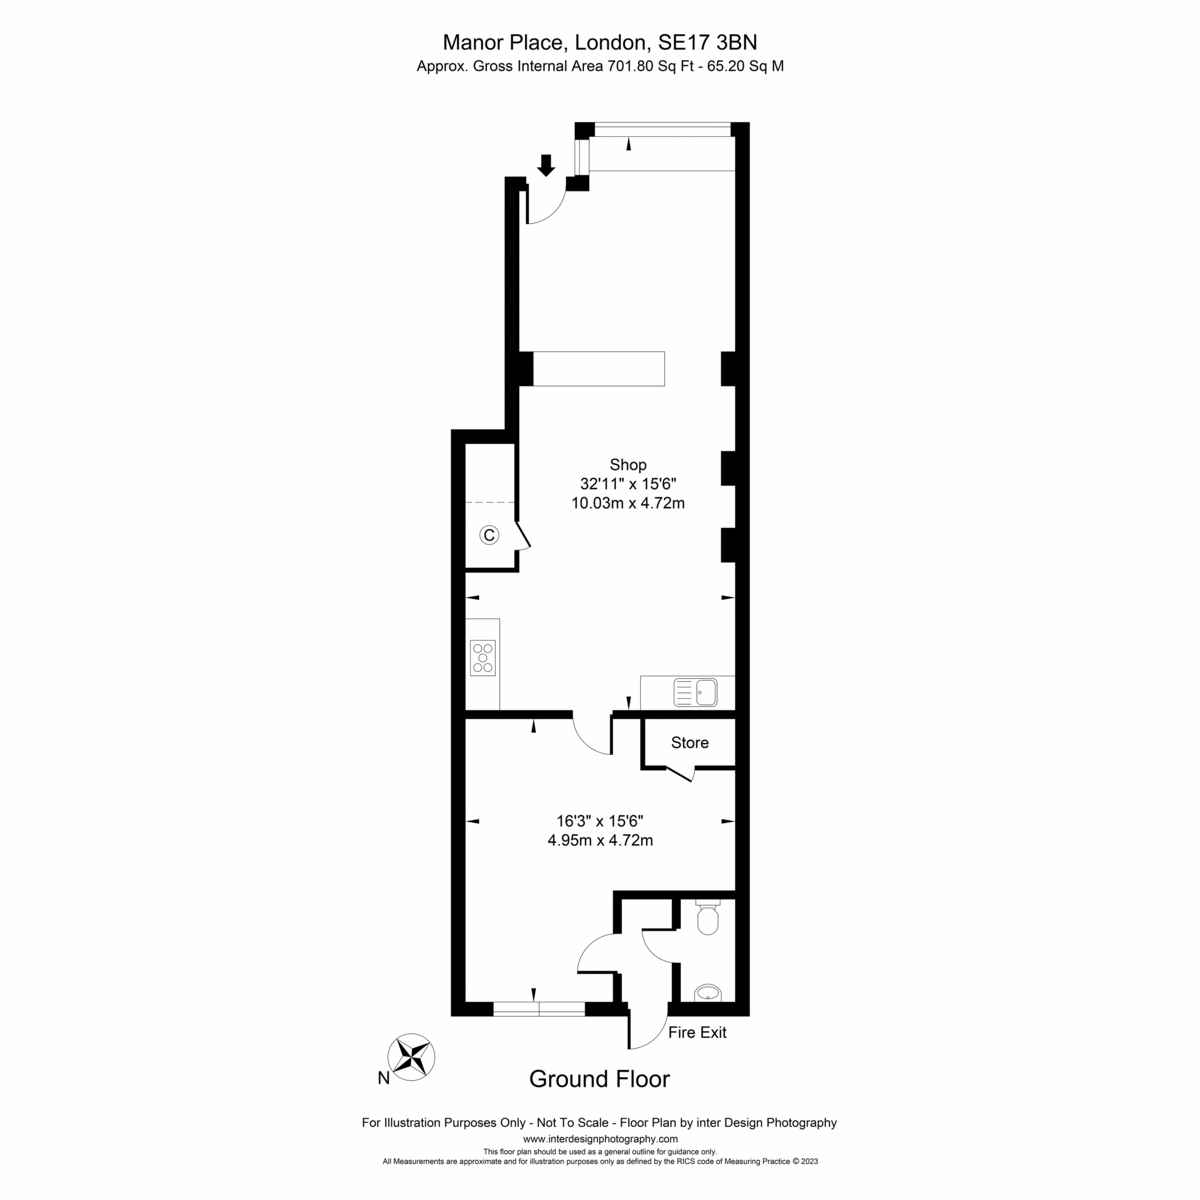 202 Manor Place, Shop, London, SE17 3BN 3 - floor plan